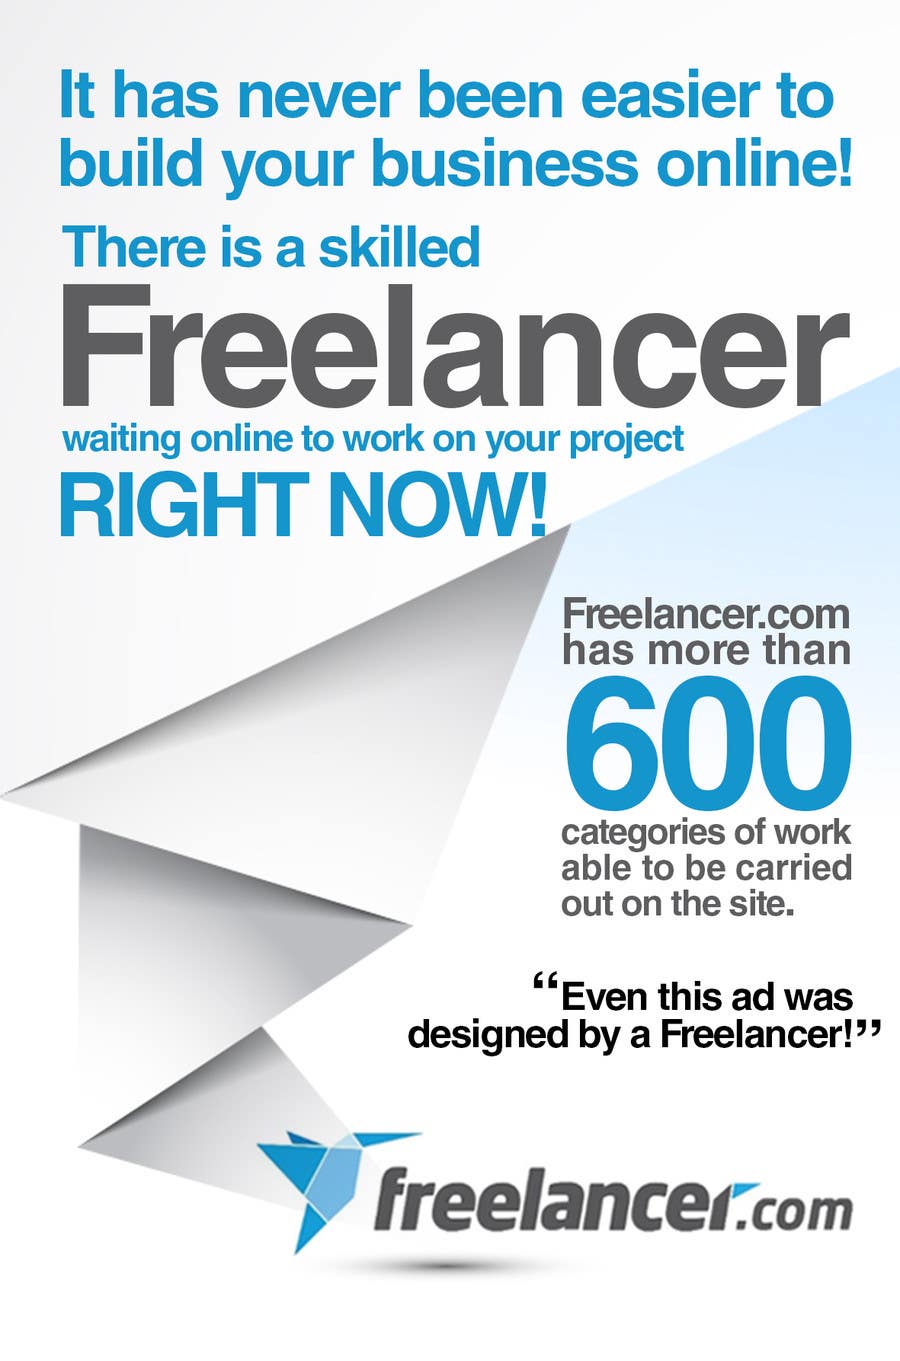 Penyertaan Peraduan #1 untuk                                                 Design an Advertisement for Freelancer.com to go in an eBook.
                                            